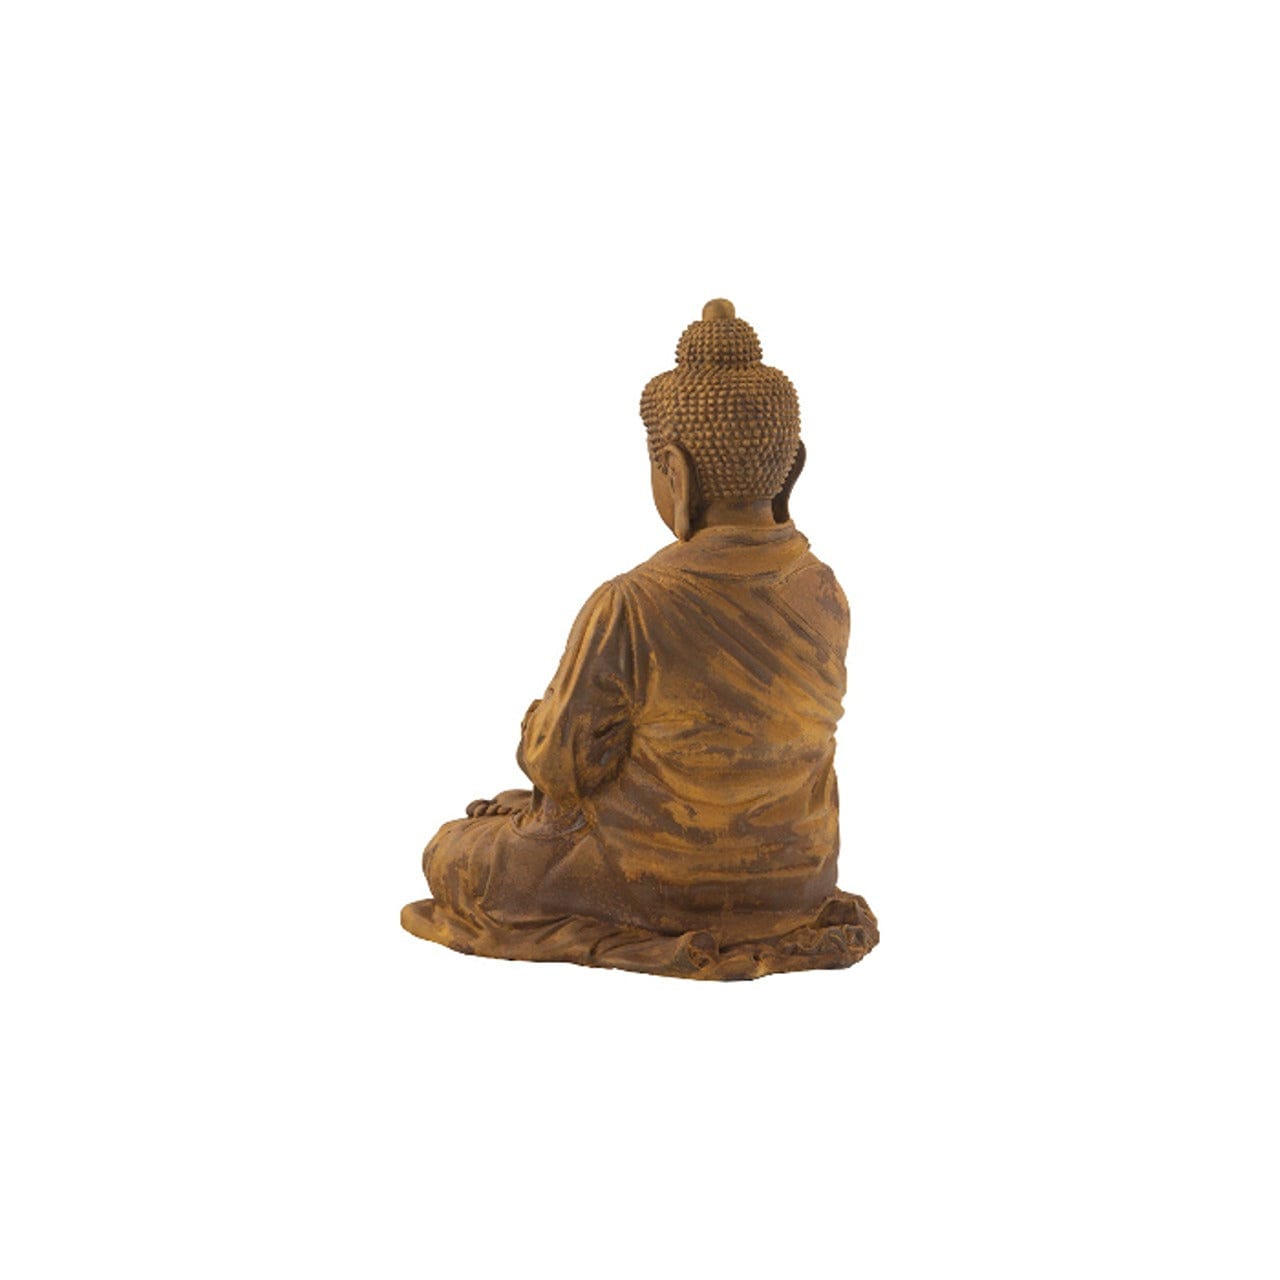 Enchanting Rust Buddha Sculpture